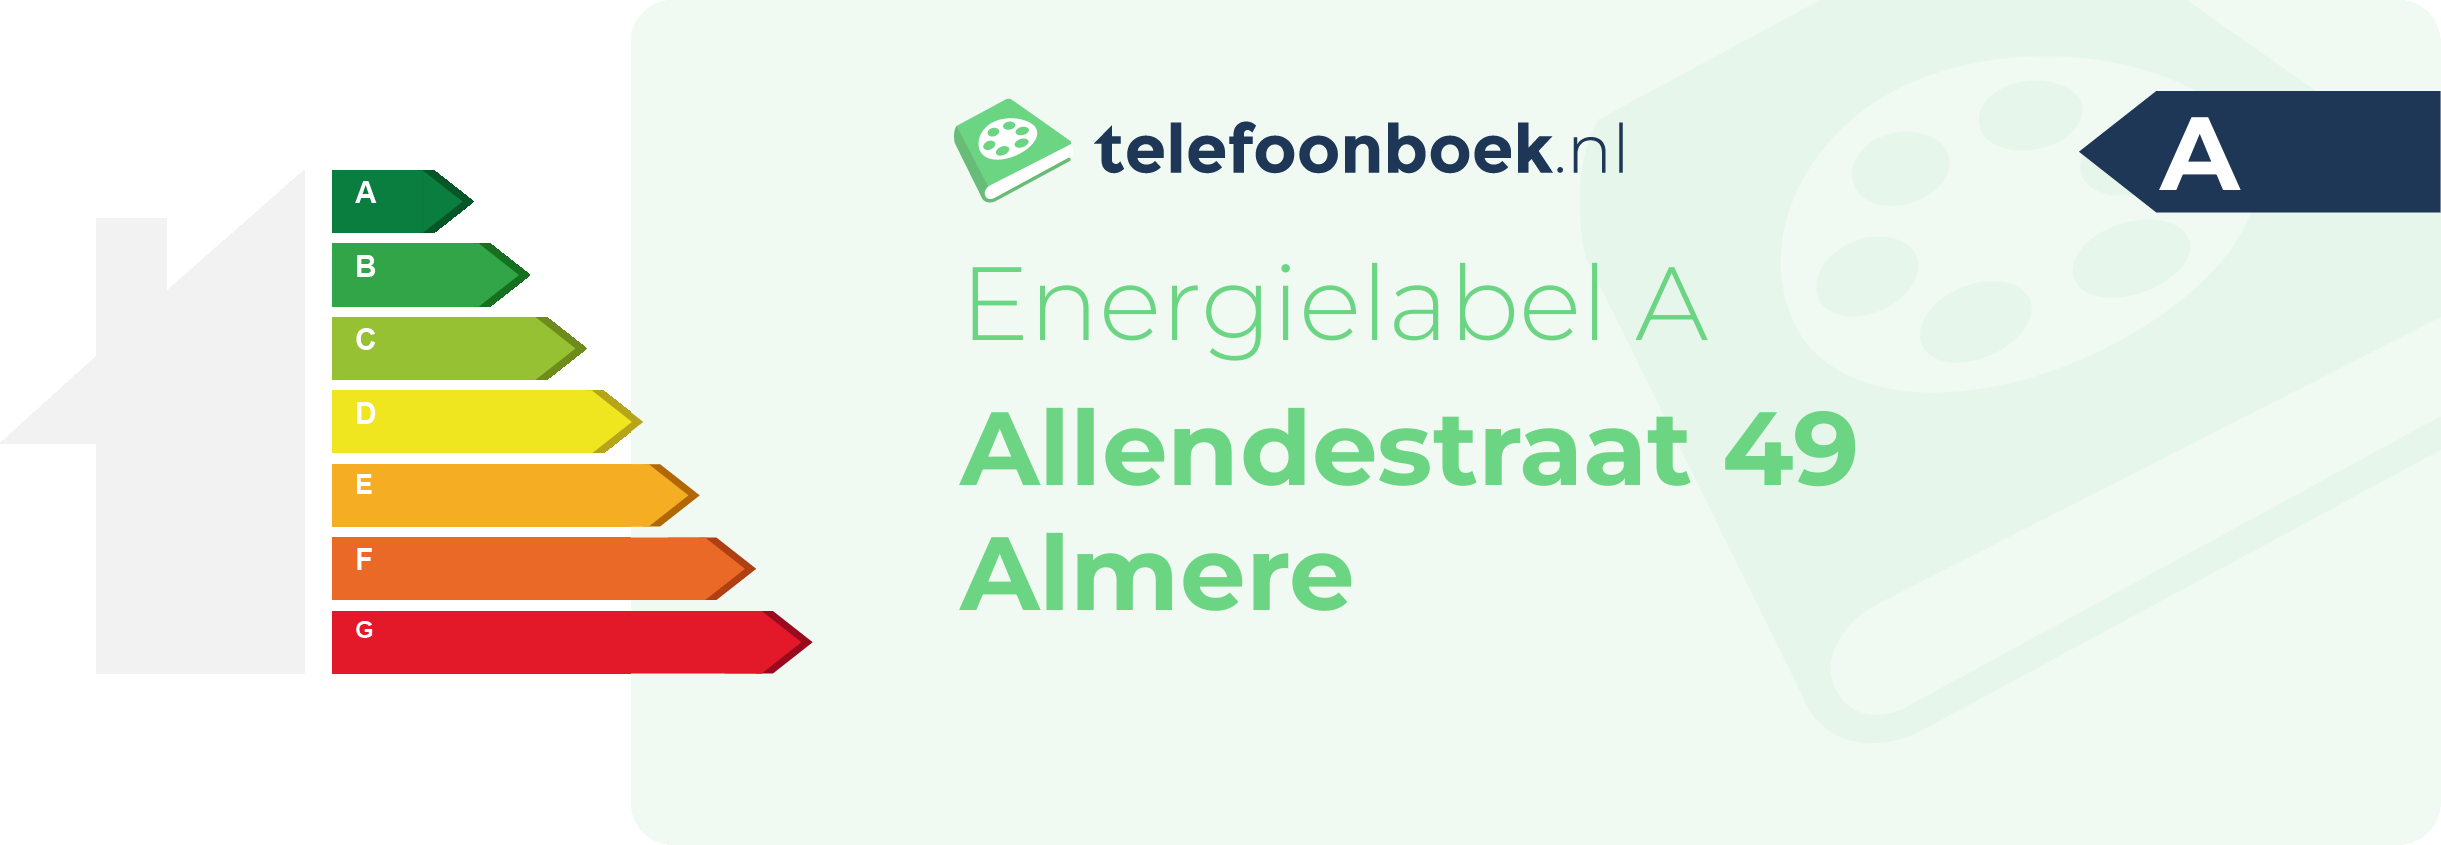 Energielabel Allendestraat 49 Almere